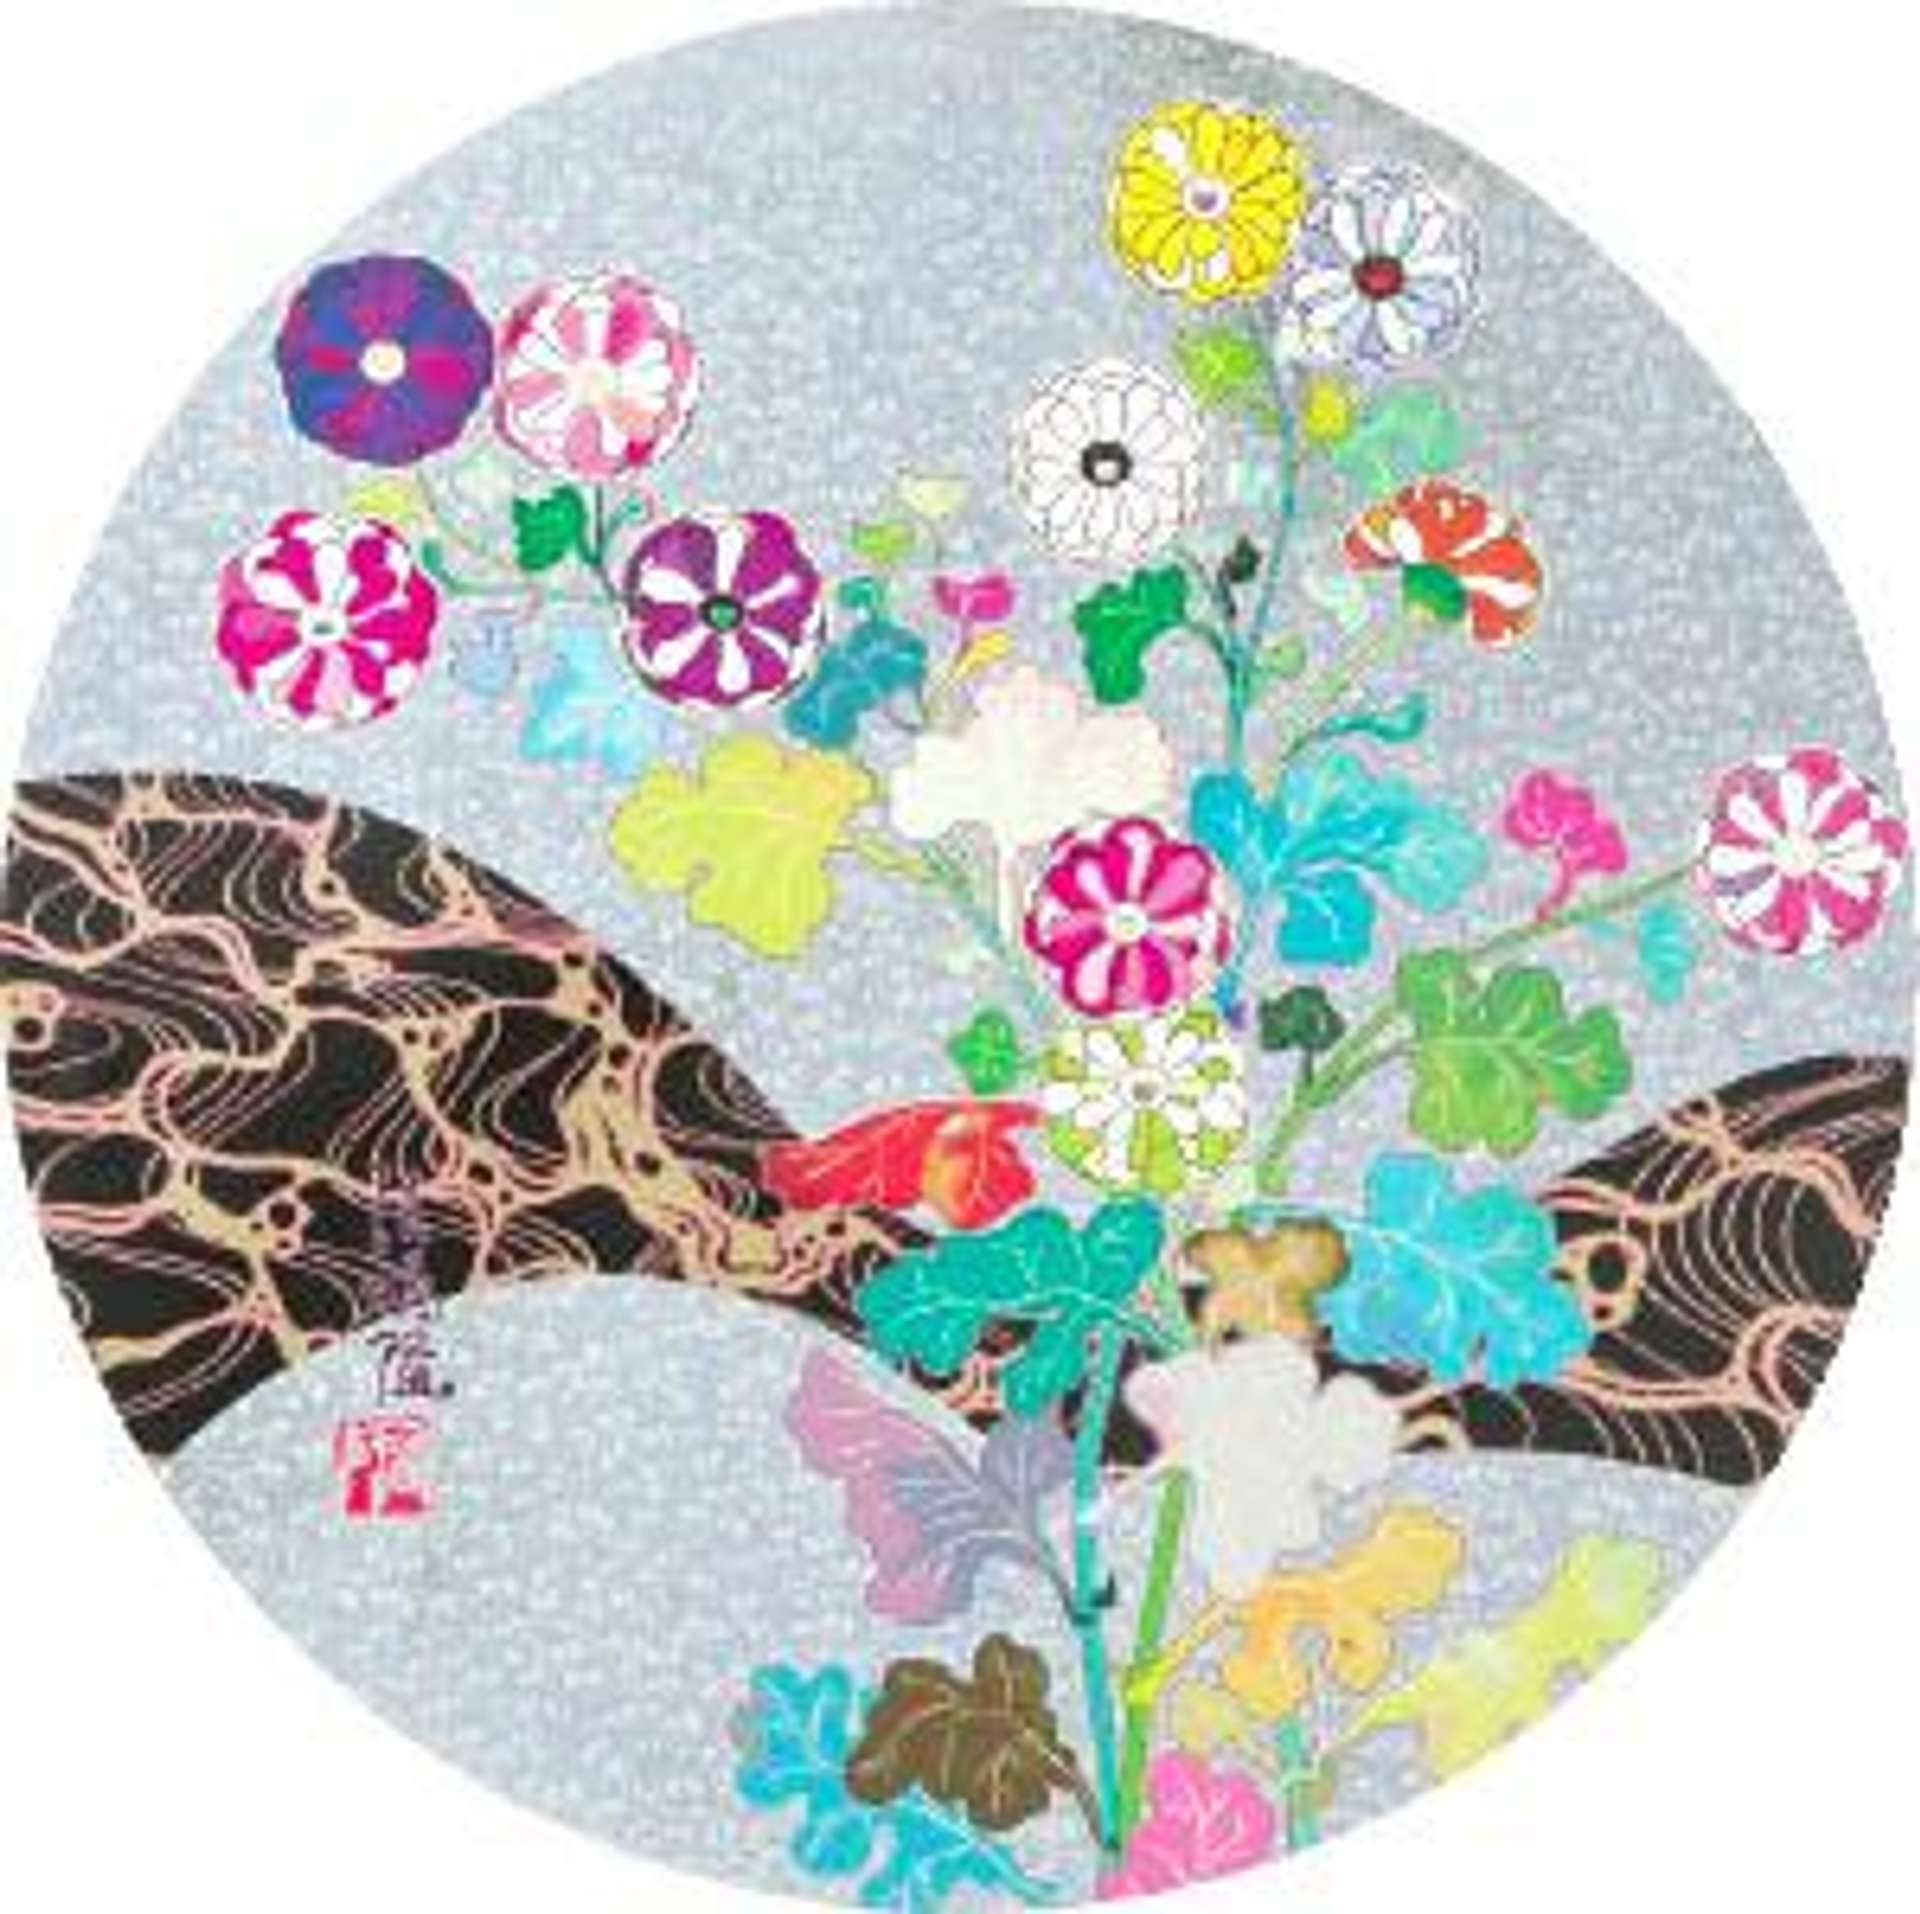 Korin Flowers - Signed Print by Takashi Murakami 2014 - MyArtBroker